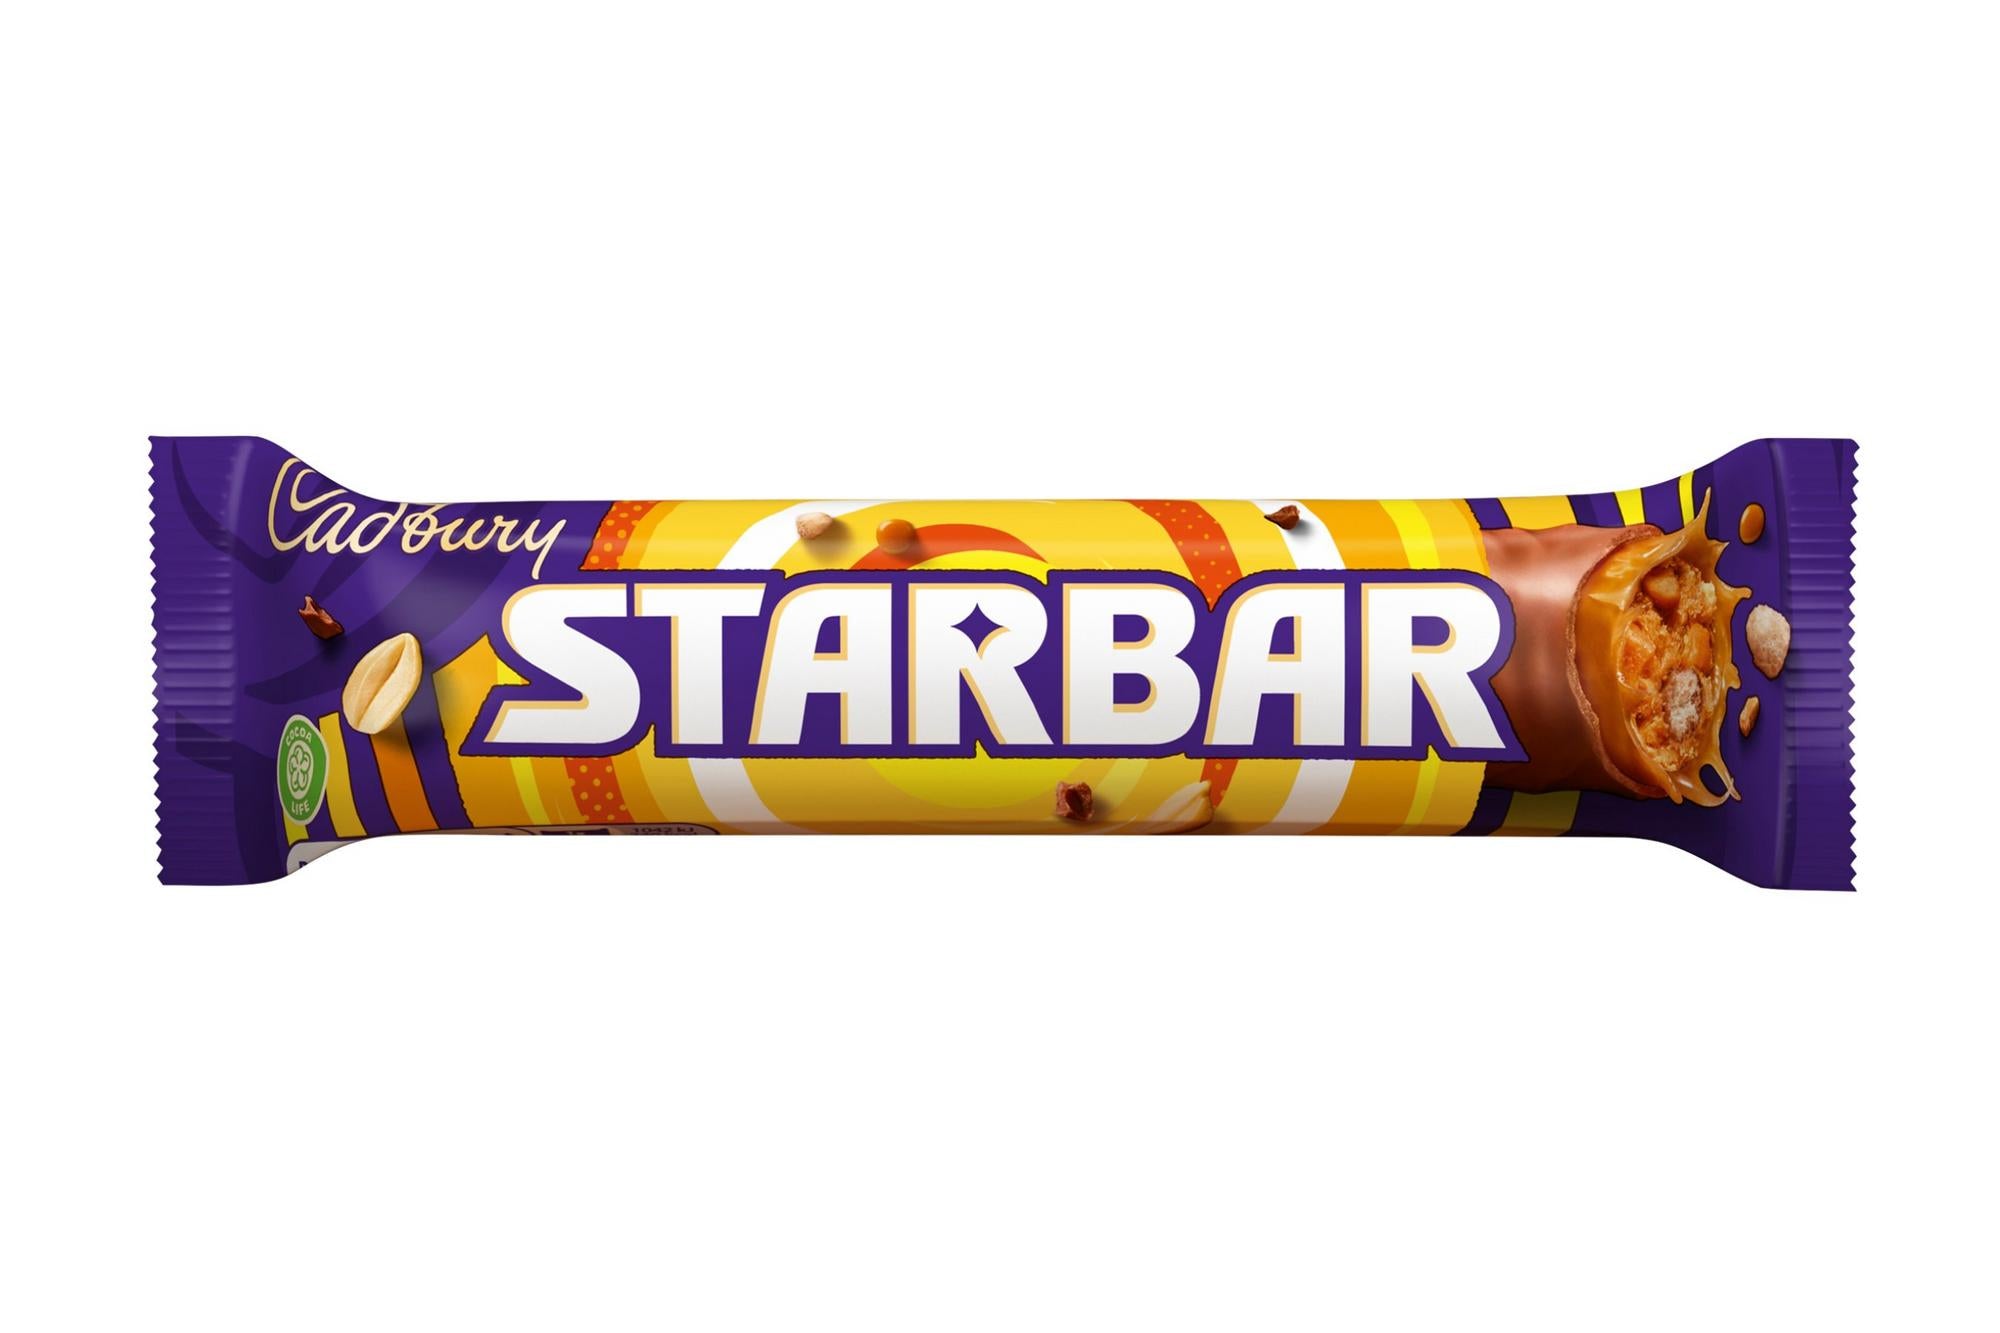 Cadbury Star Bar